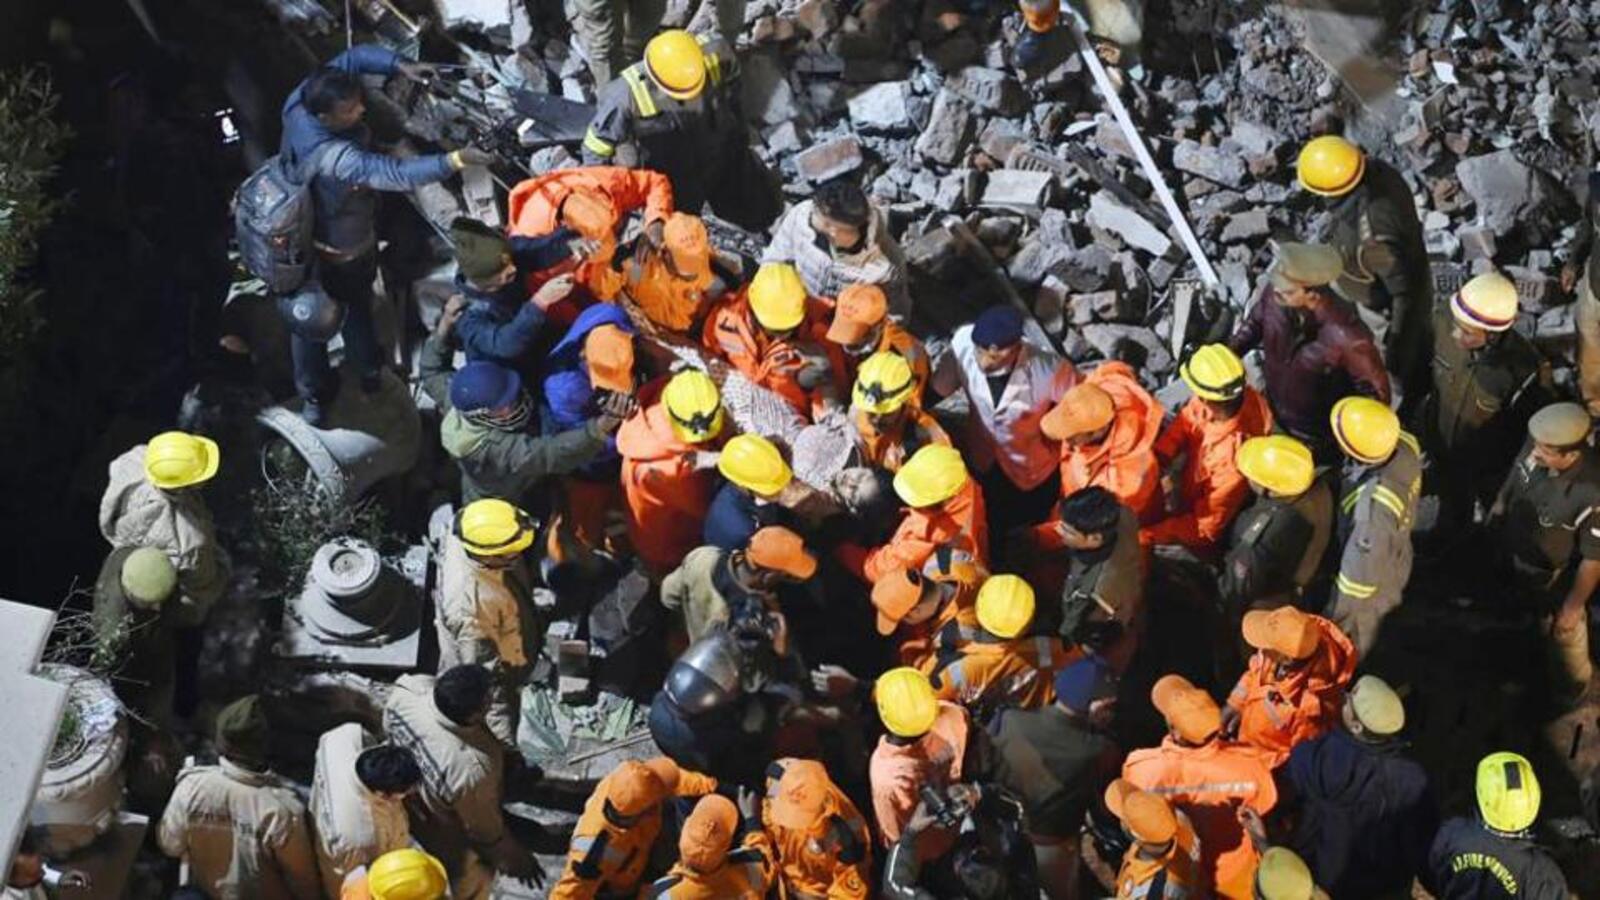 लखनऊ में इमारत गिरी, मलबे से 13 लोगों को जिंदा निकाला गया- Building collapses in Lucknow, 13 people pulled out alive from the debris